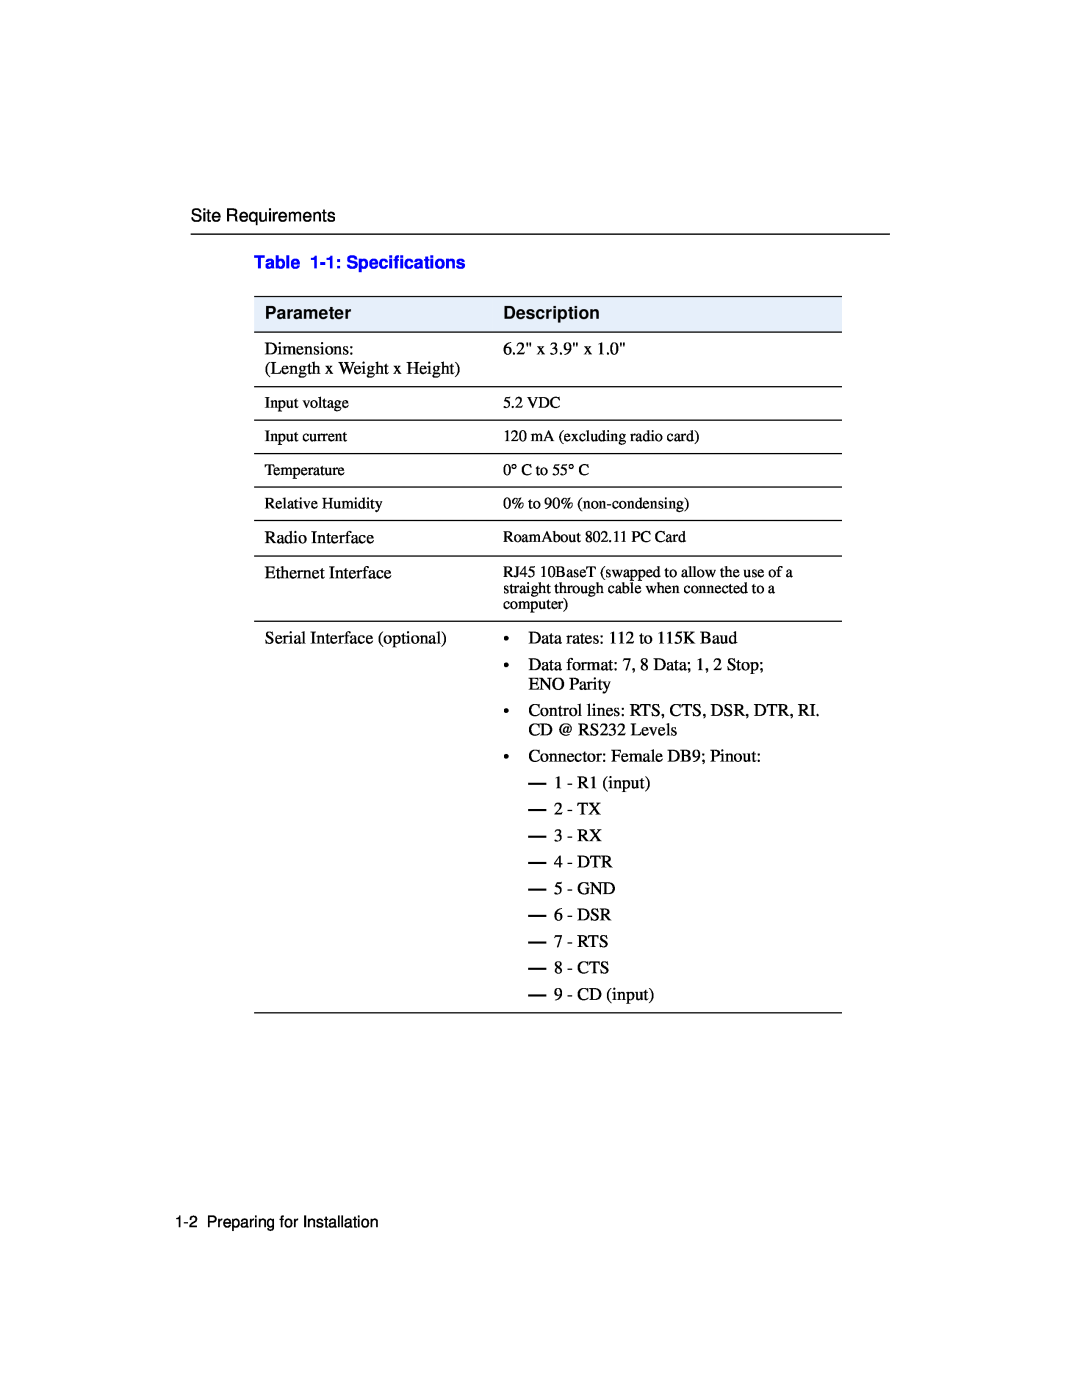 Enterasys Networks Wireless Ethernet Adapter I manual 1 Specifications, Parameter, Description 